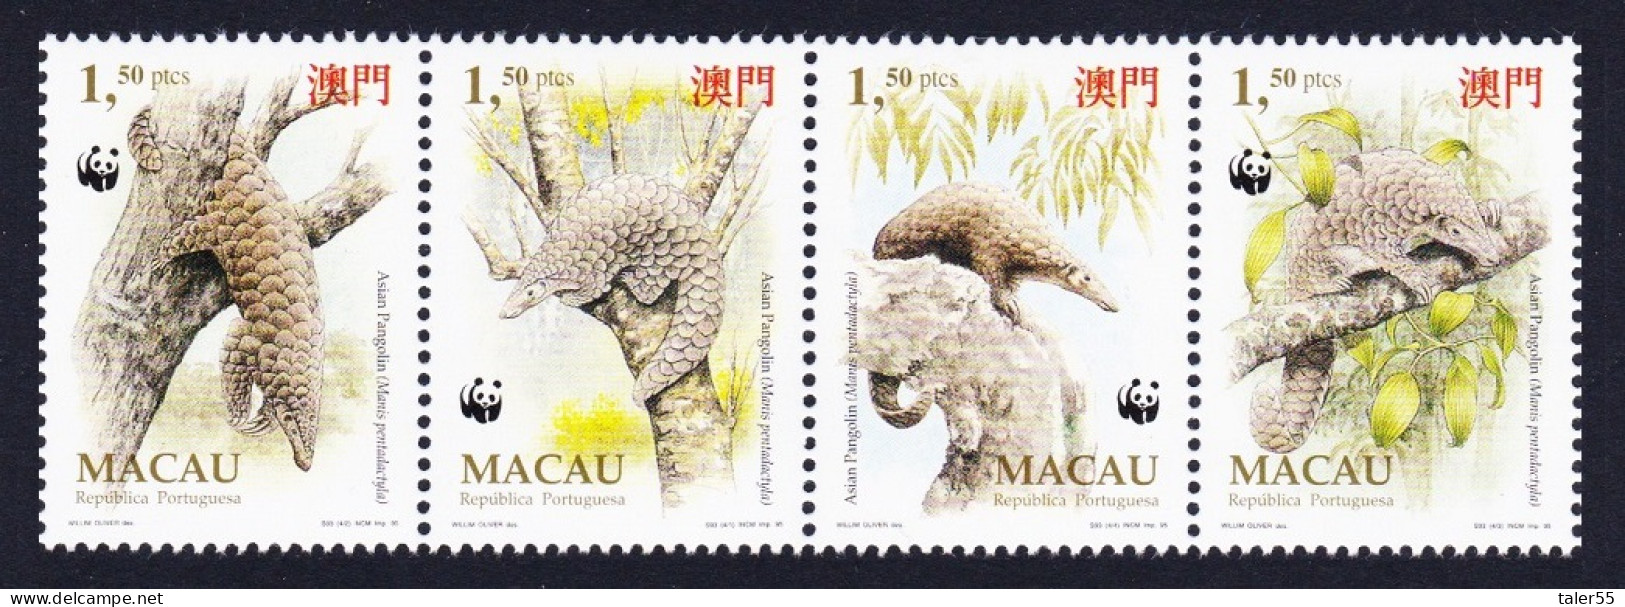 Macao Macau WWF Chinese Pangolin 4v Strip 1995 MNH SG#880-883 MI#795-798 Sc#767-770 - Ongebruikt